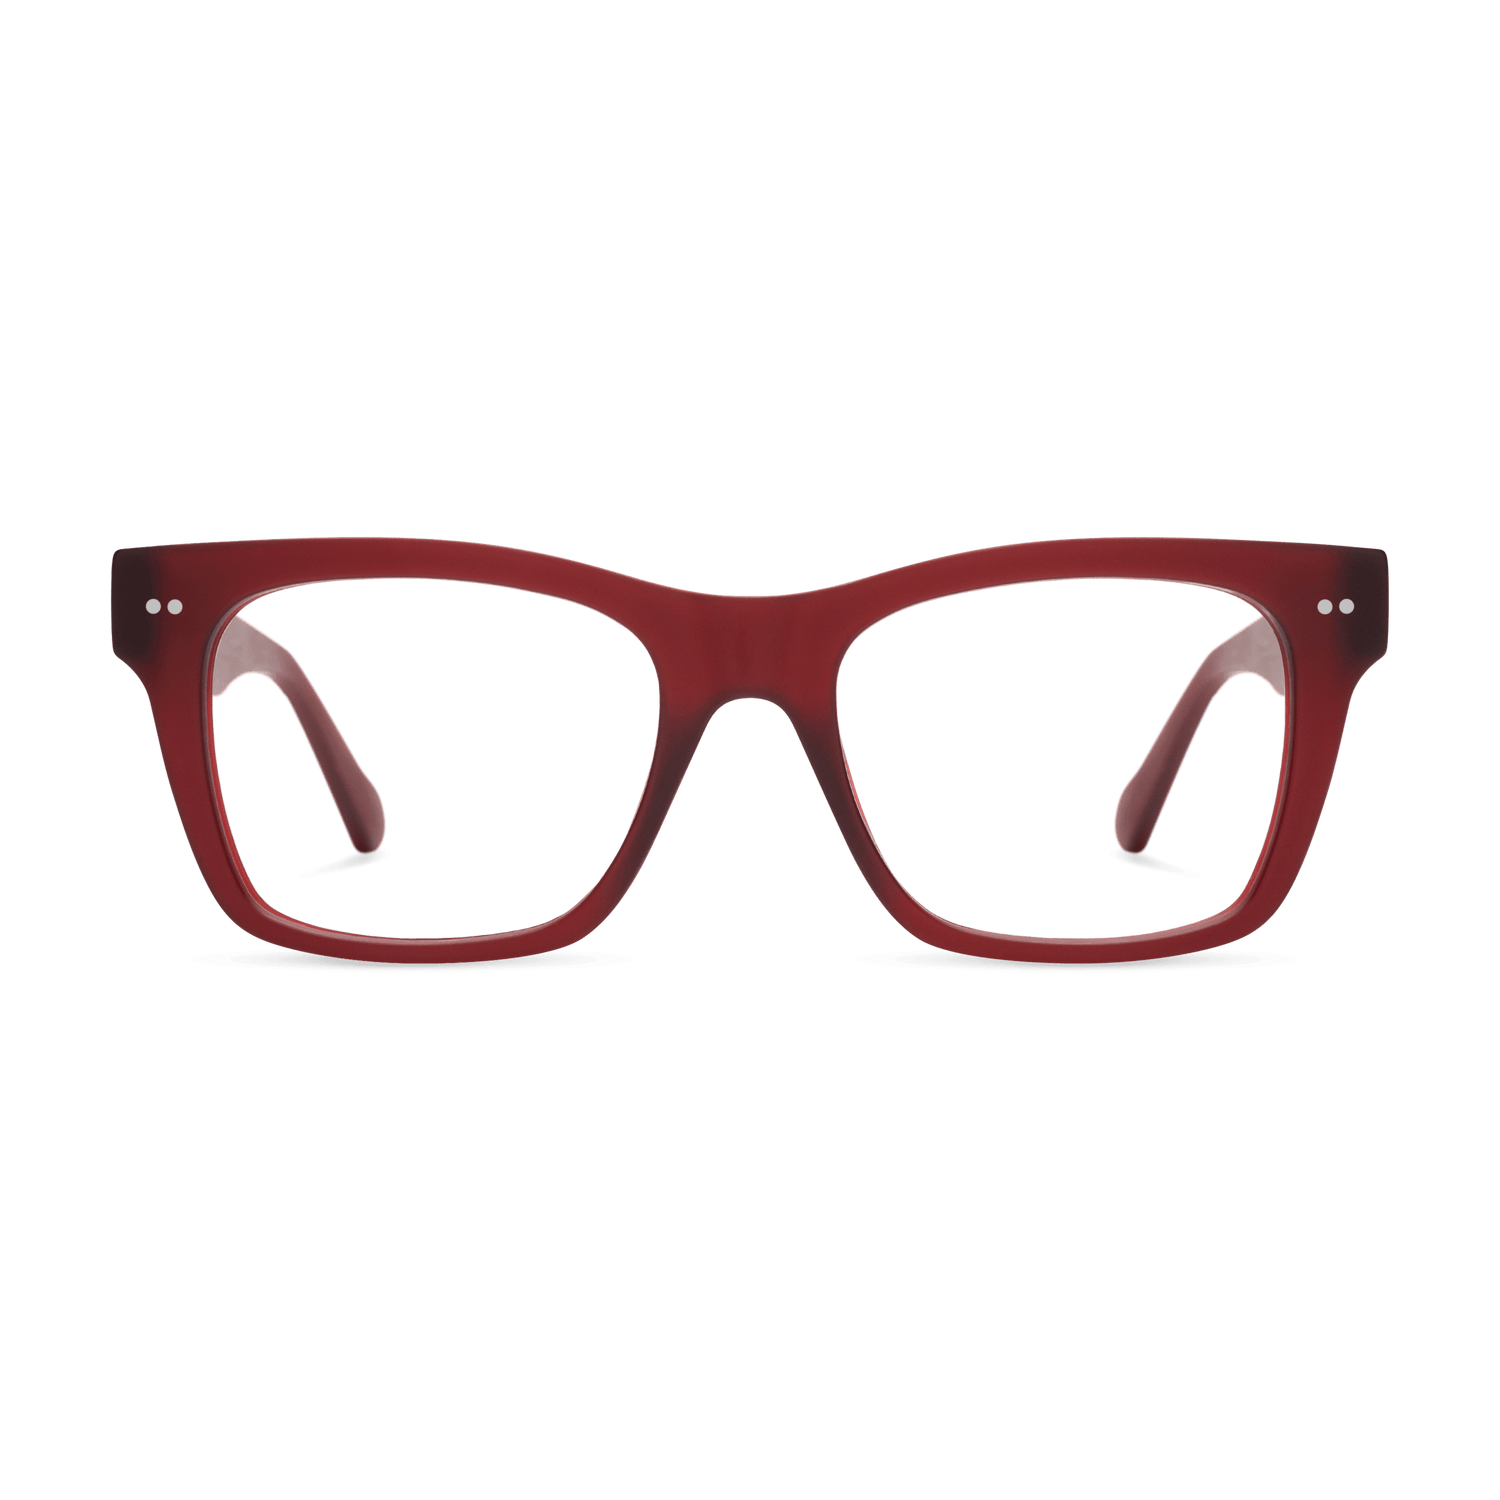 Cosmo Blue Light Eyewear Frames LOOK OPTIC (Crimson) +0.00 